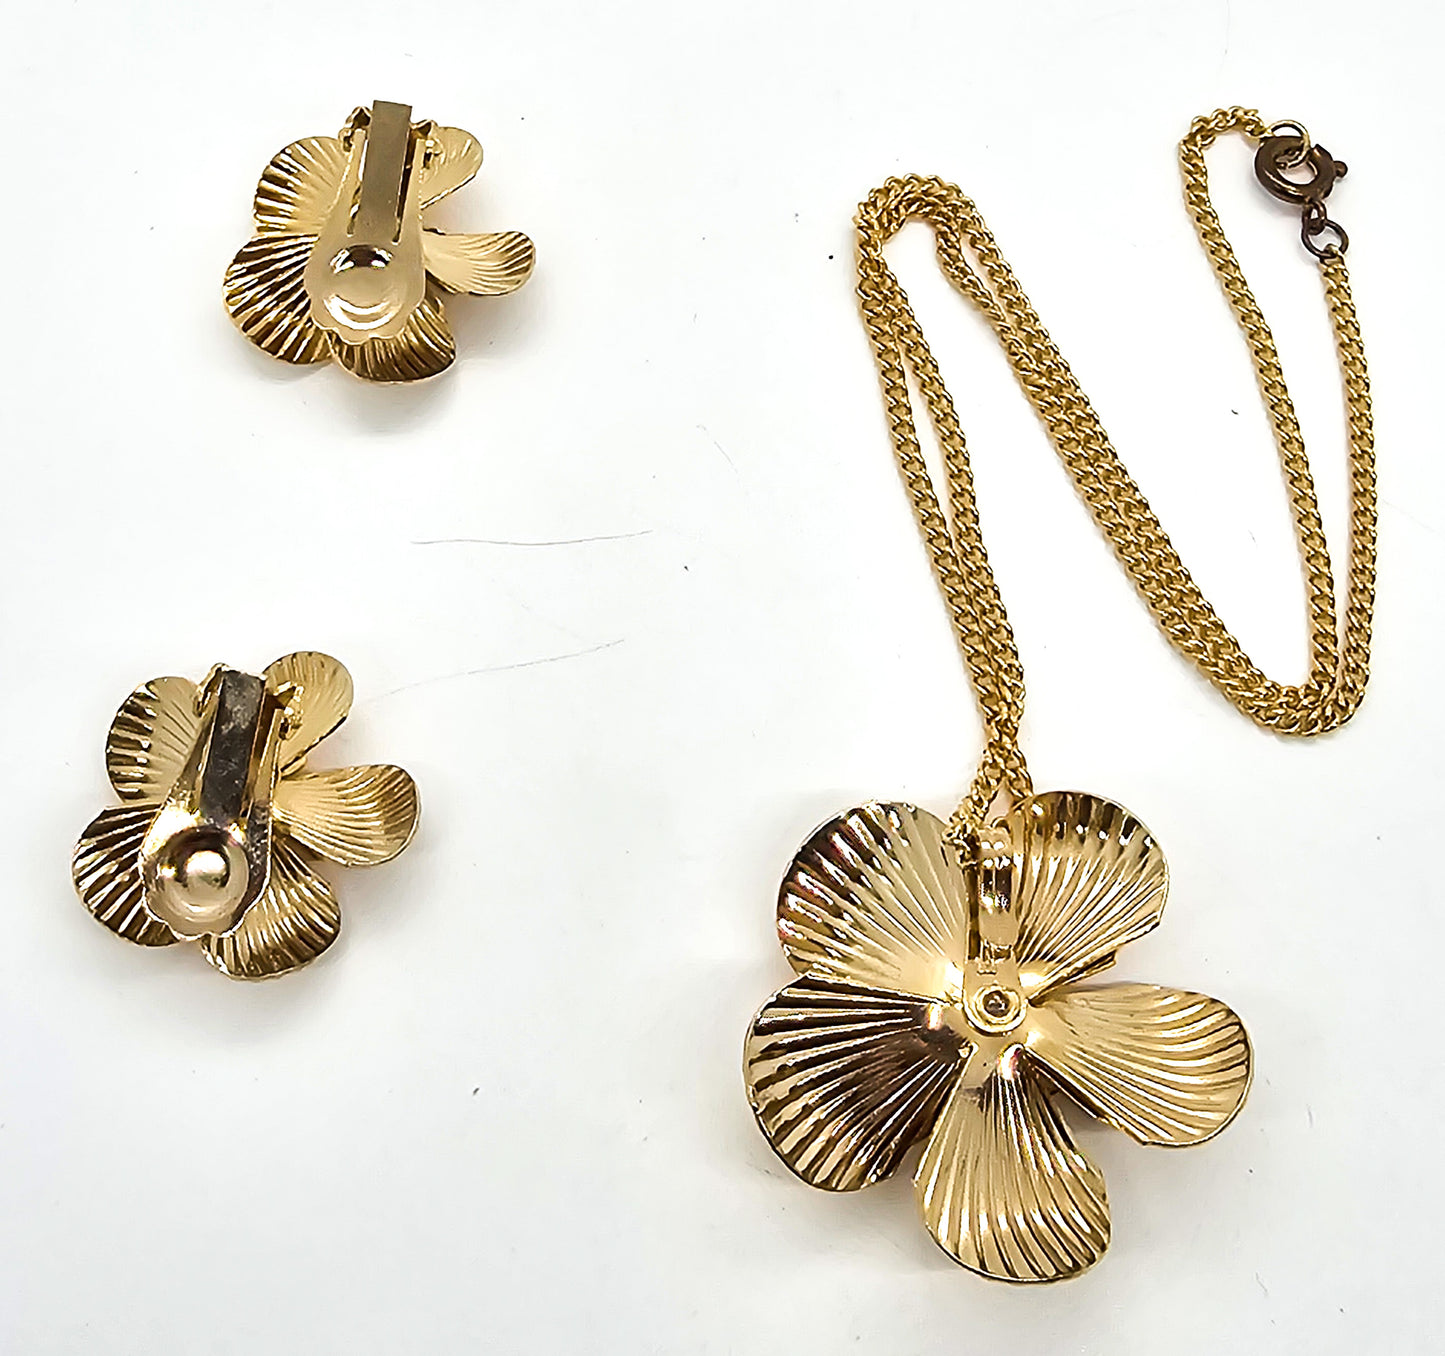 Milady Boxed gold Aurora Borealis vintage rhinestone earrings and necklace demi parure set